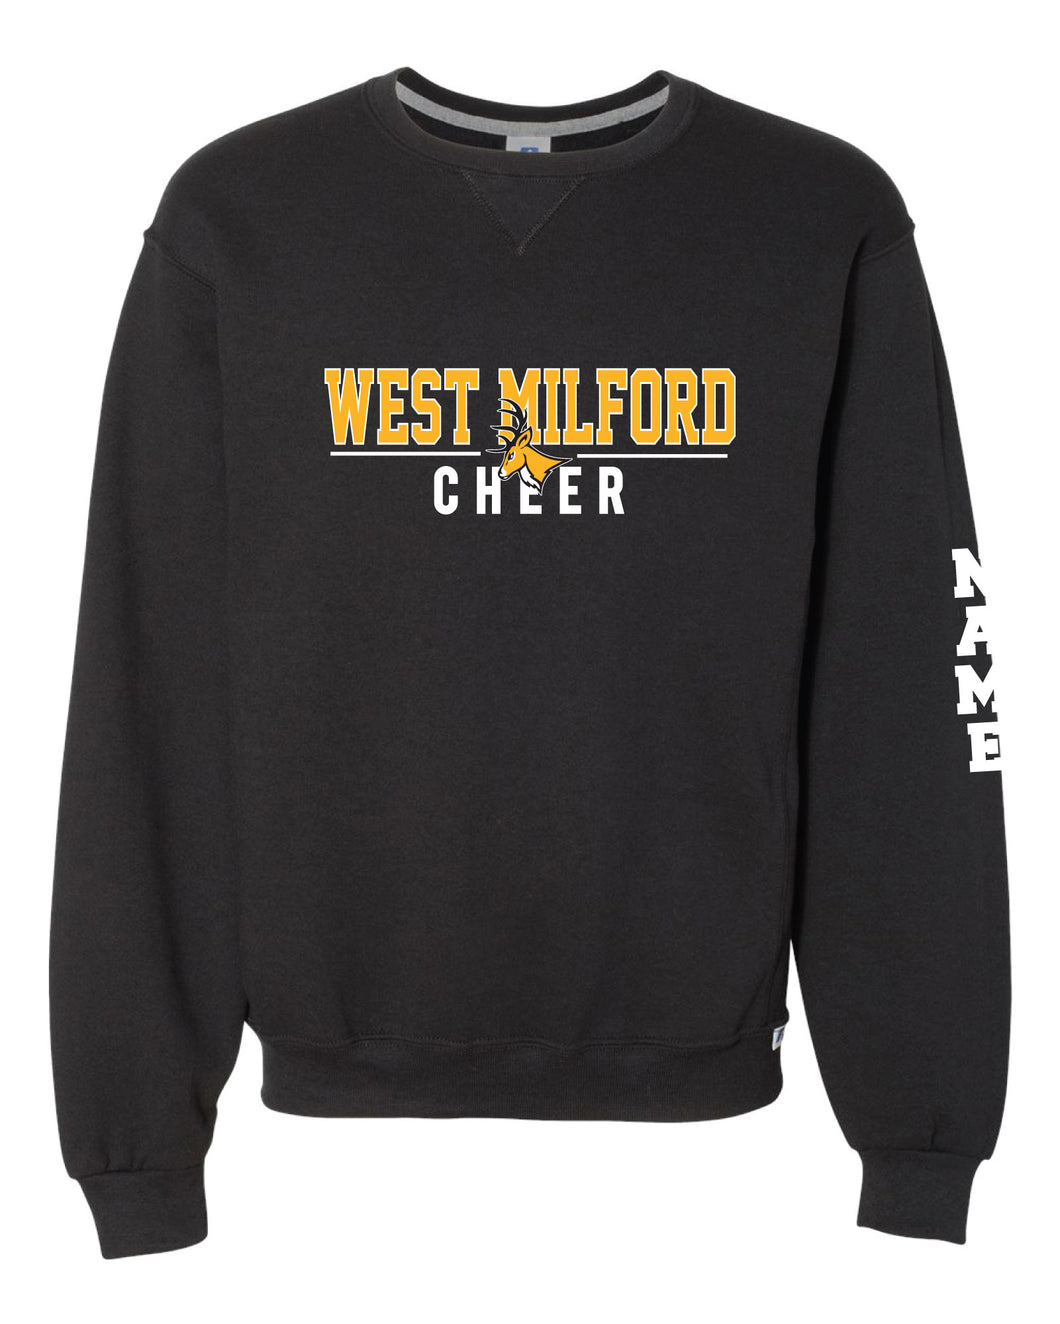 West Milford Highlanders Cheer Russell Athletic Cotton Crewneck Sweatshirt - Black